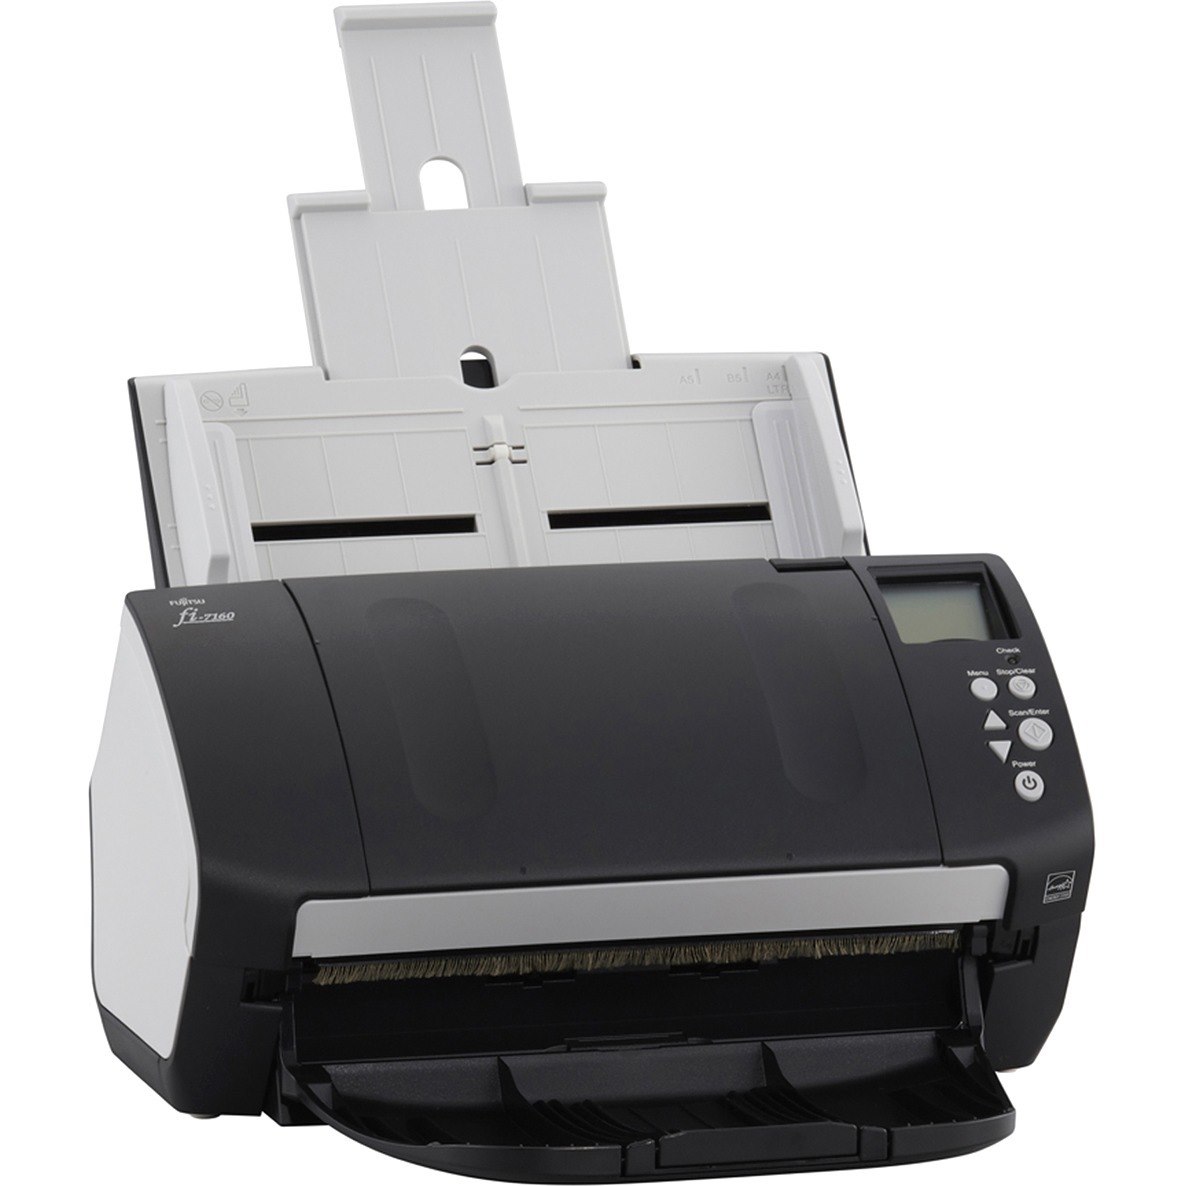 Fujitsu fi-7160 Professional Desktop Color Duplex Document Scanner with Auto Document Feeder (ADF)